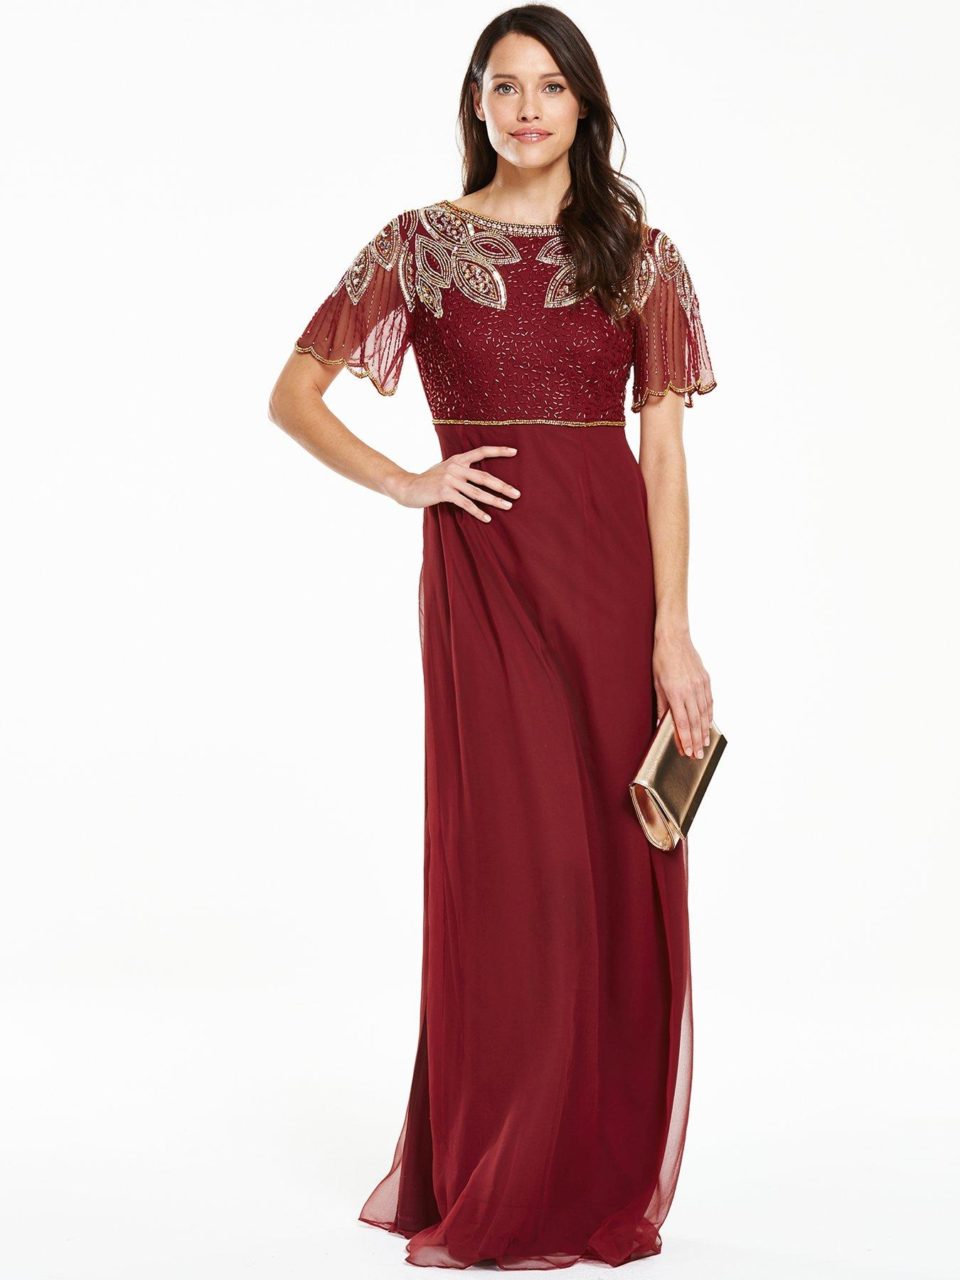 v-by-very-merlot-embellished-maxi-dress-vintage-bridesmaid